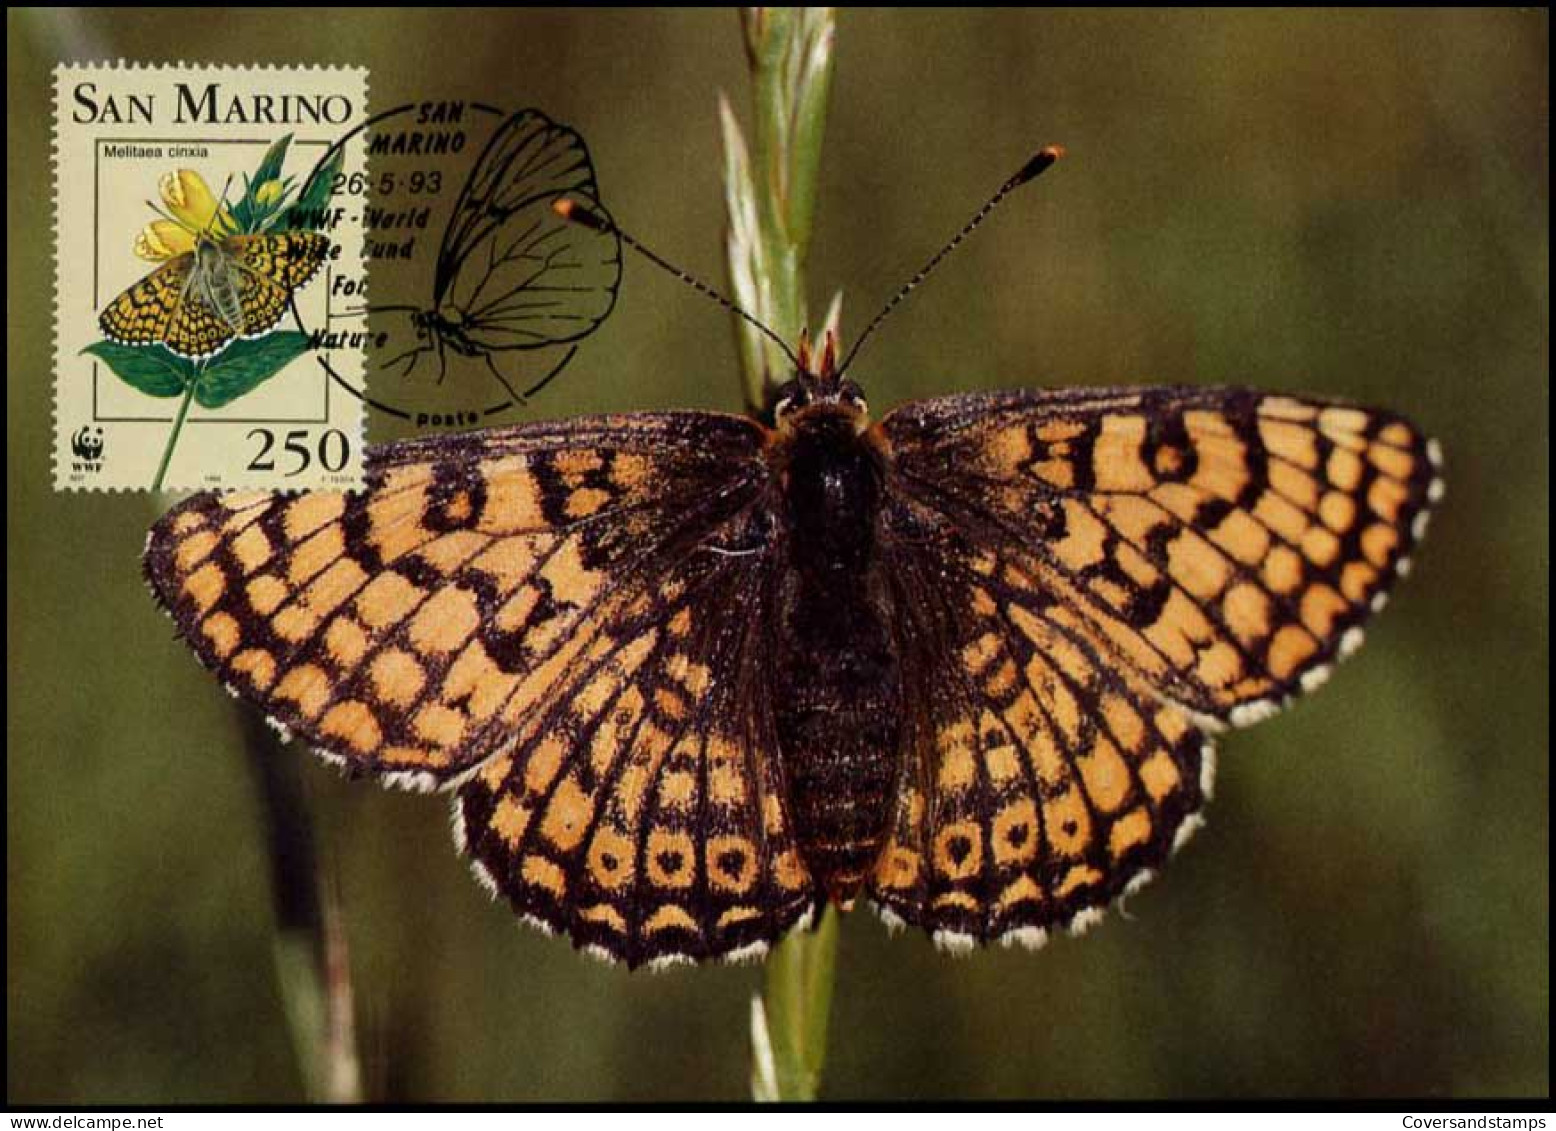  San Marino - MK -  WWF - Glanville Fritillary - Vlinders